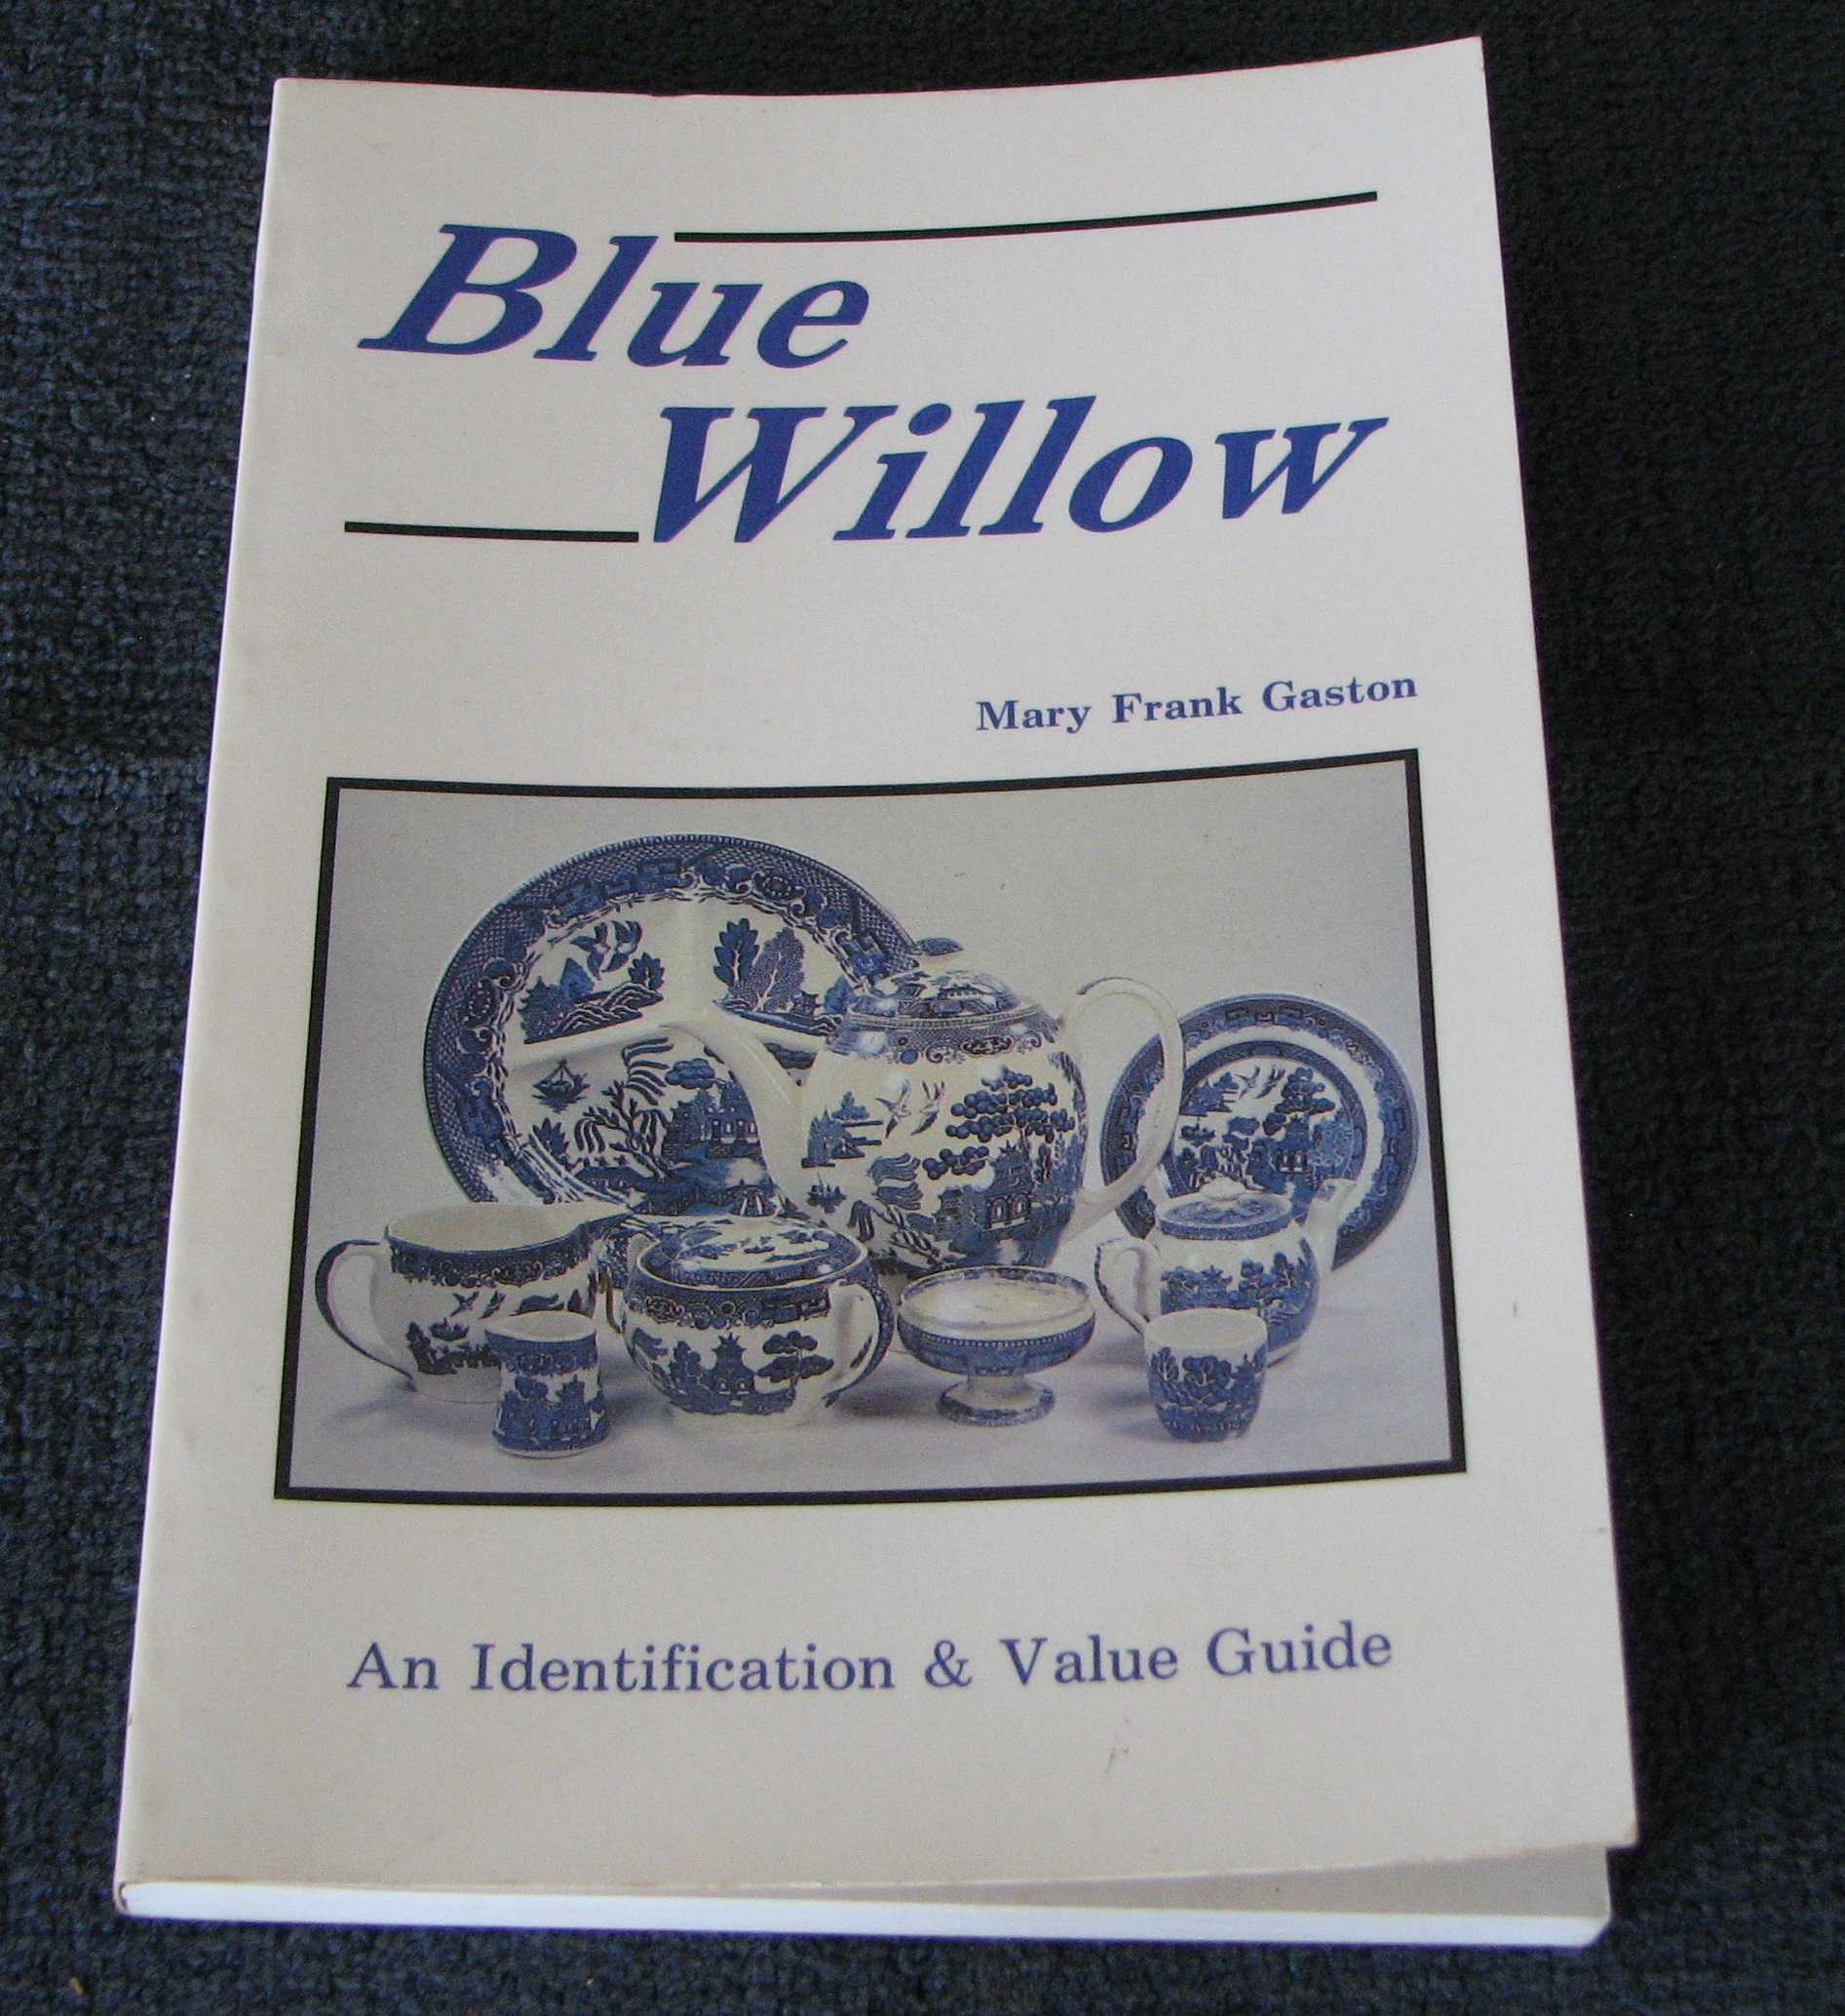 Blue Willow Pattern - The eBay Community